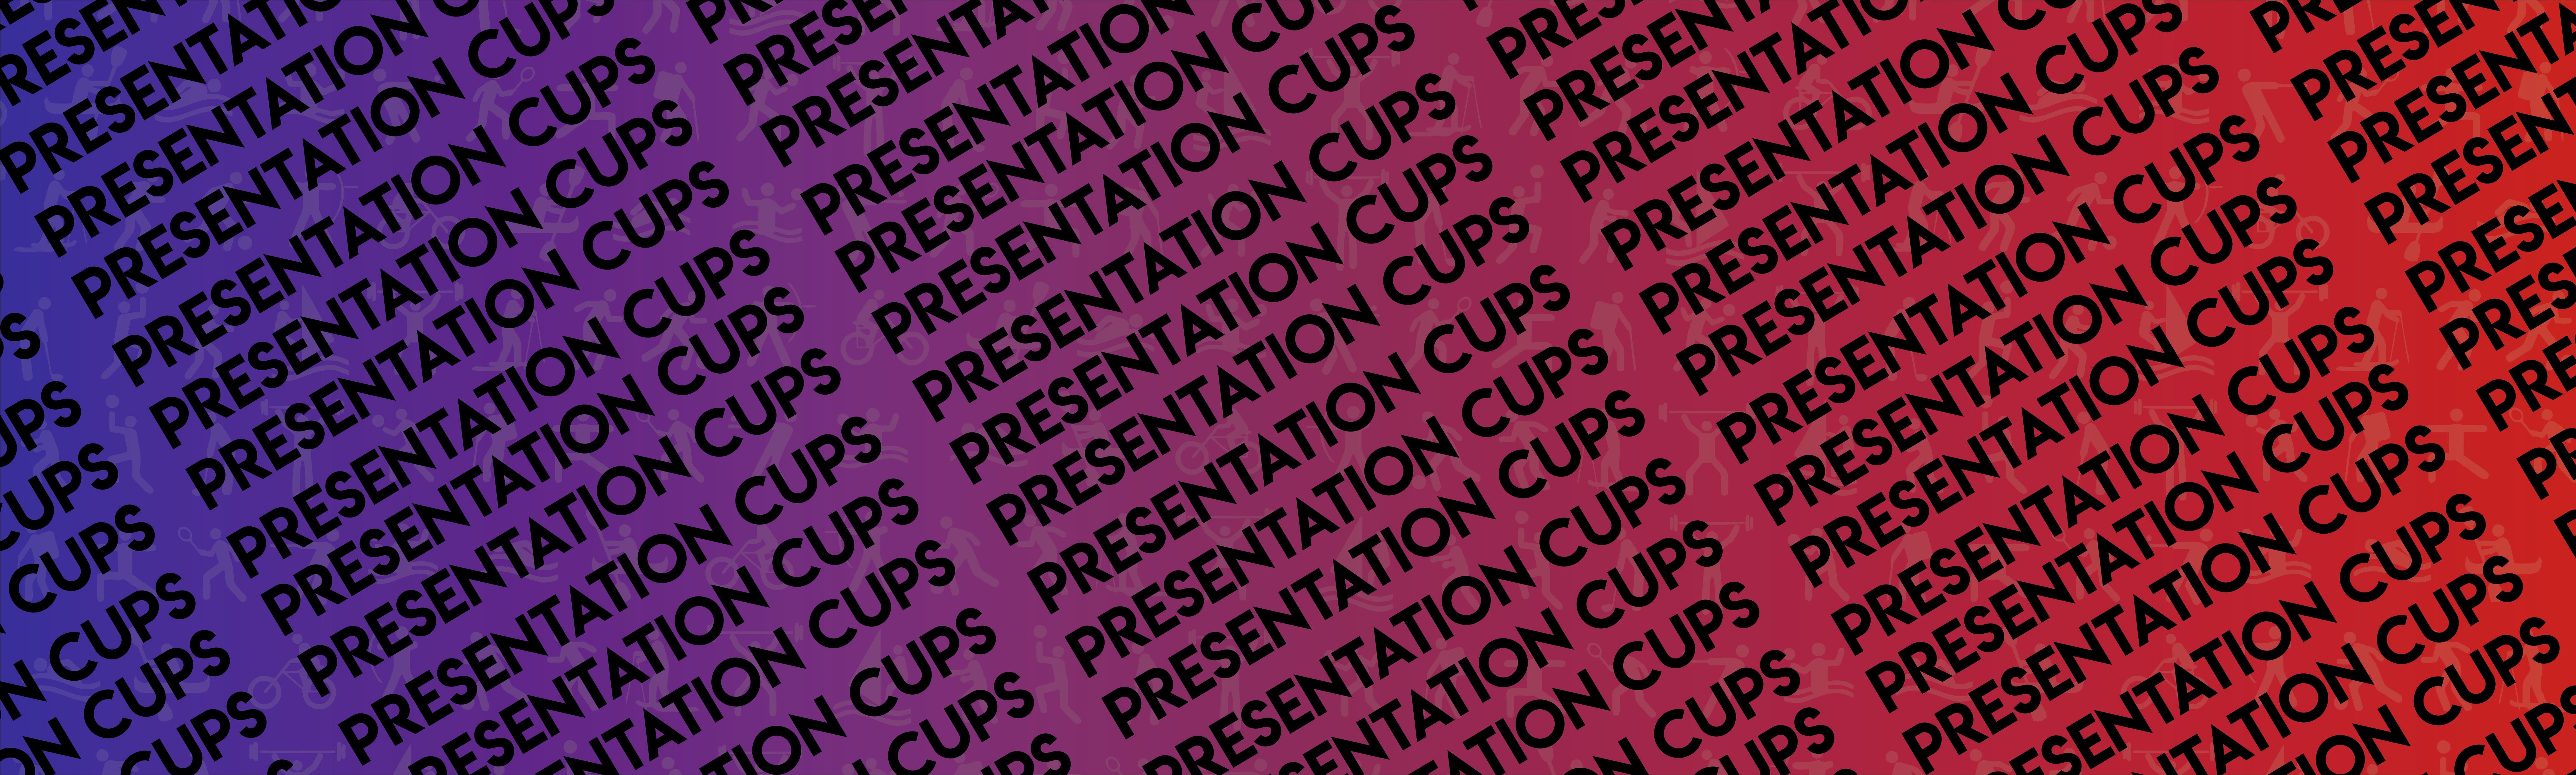 Presentation Cups